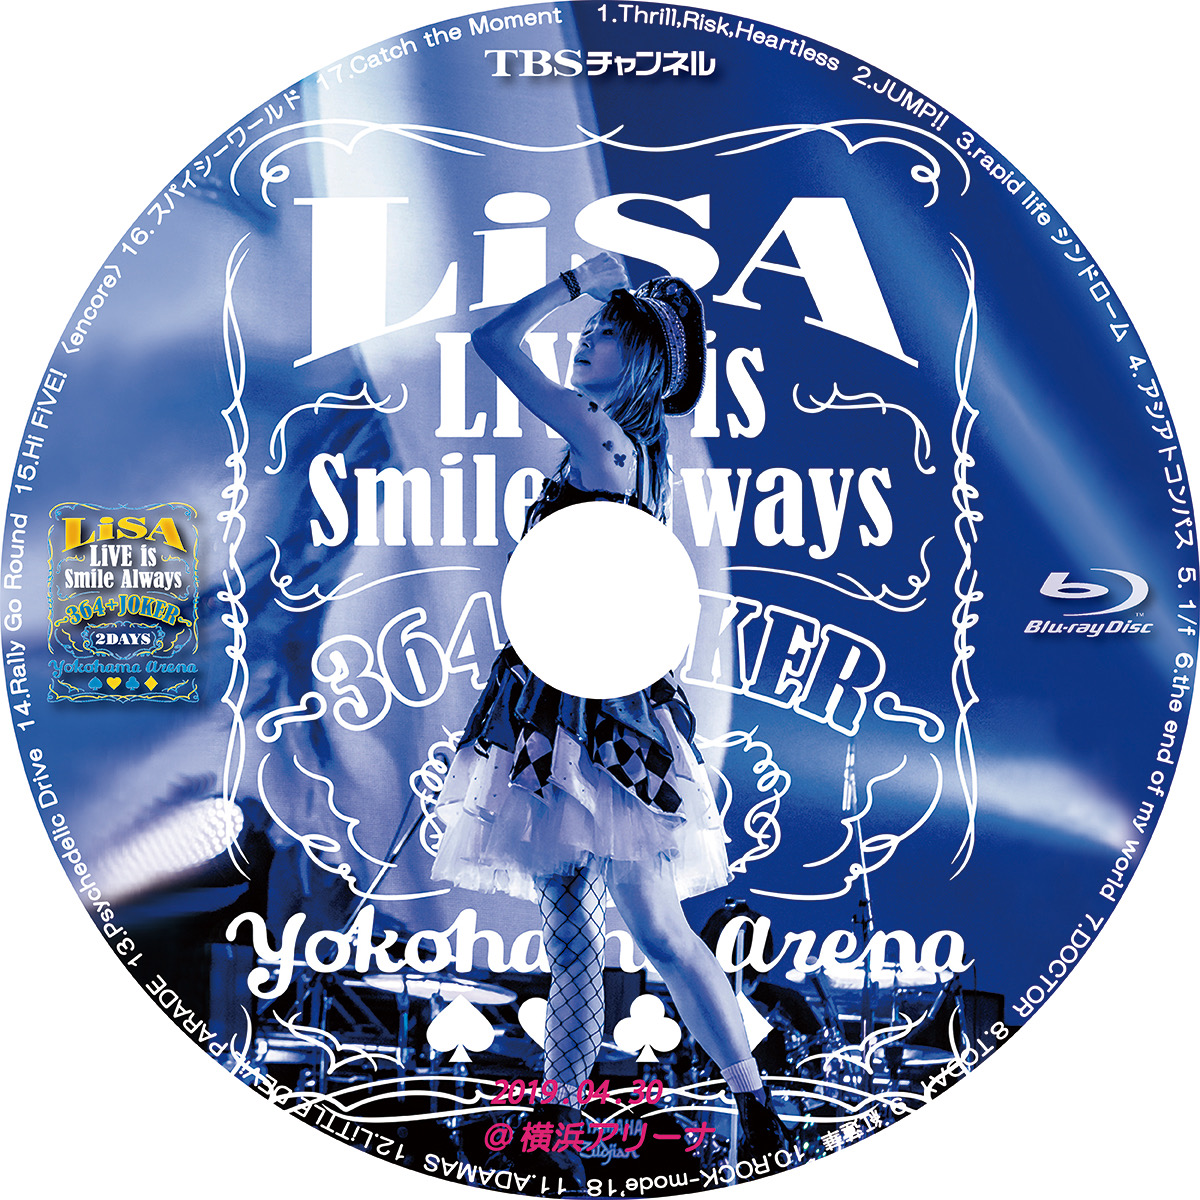 Lisa Live Is Smile Always 364 Joker Tbsチャンネル1 レーベル屋さん